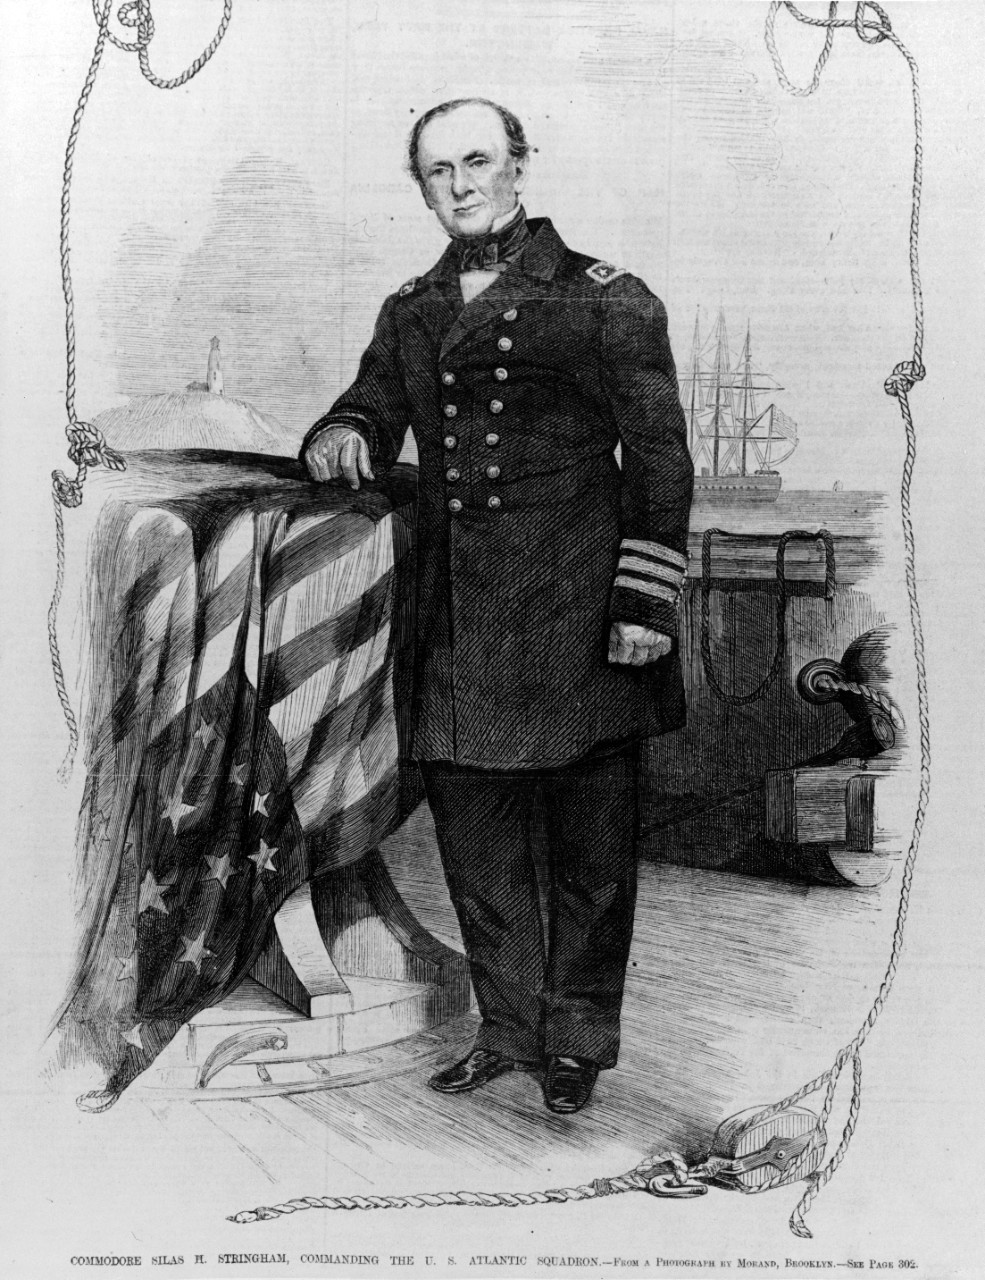 Commodore Silas H. Stringham